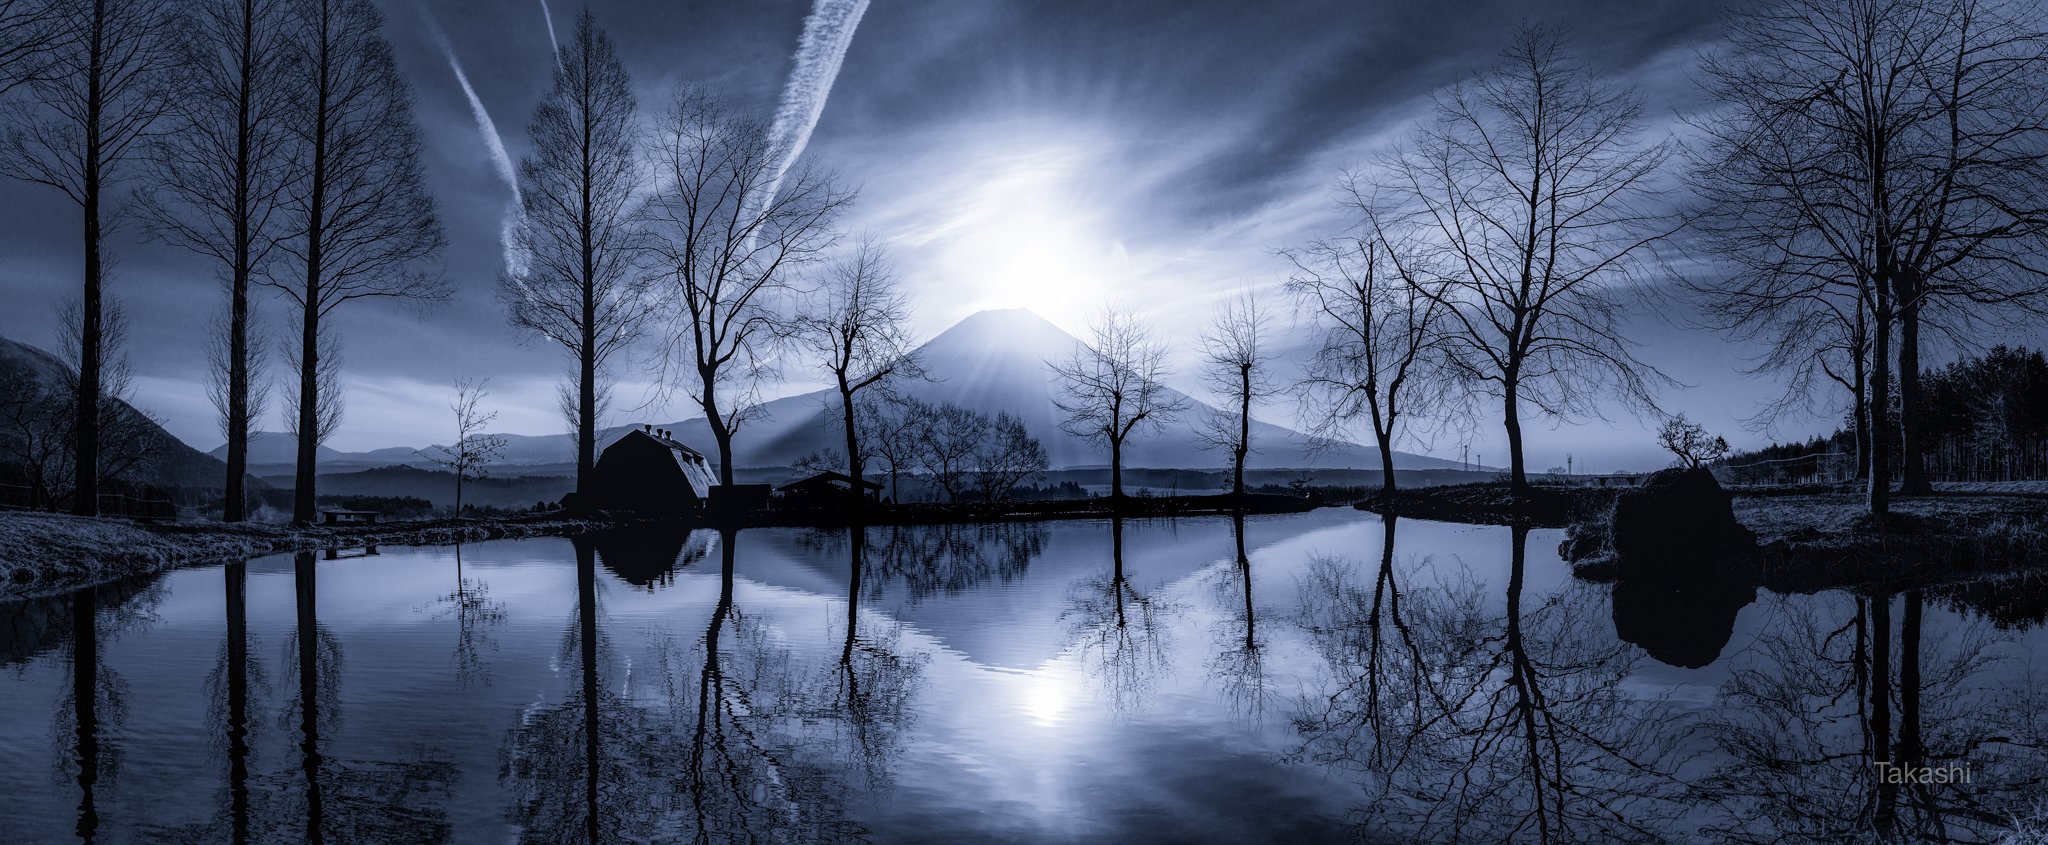 Fuji,Japan,mountain,trees,lake,water,reflection,sun,sunrise,amazing,fantastic,, Takashi